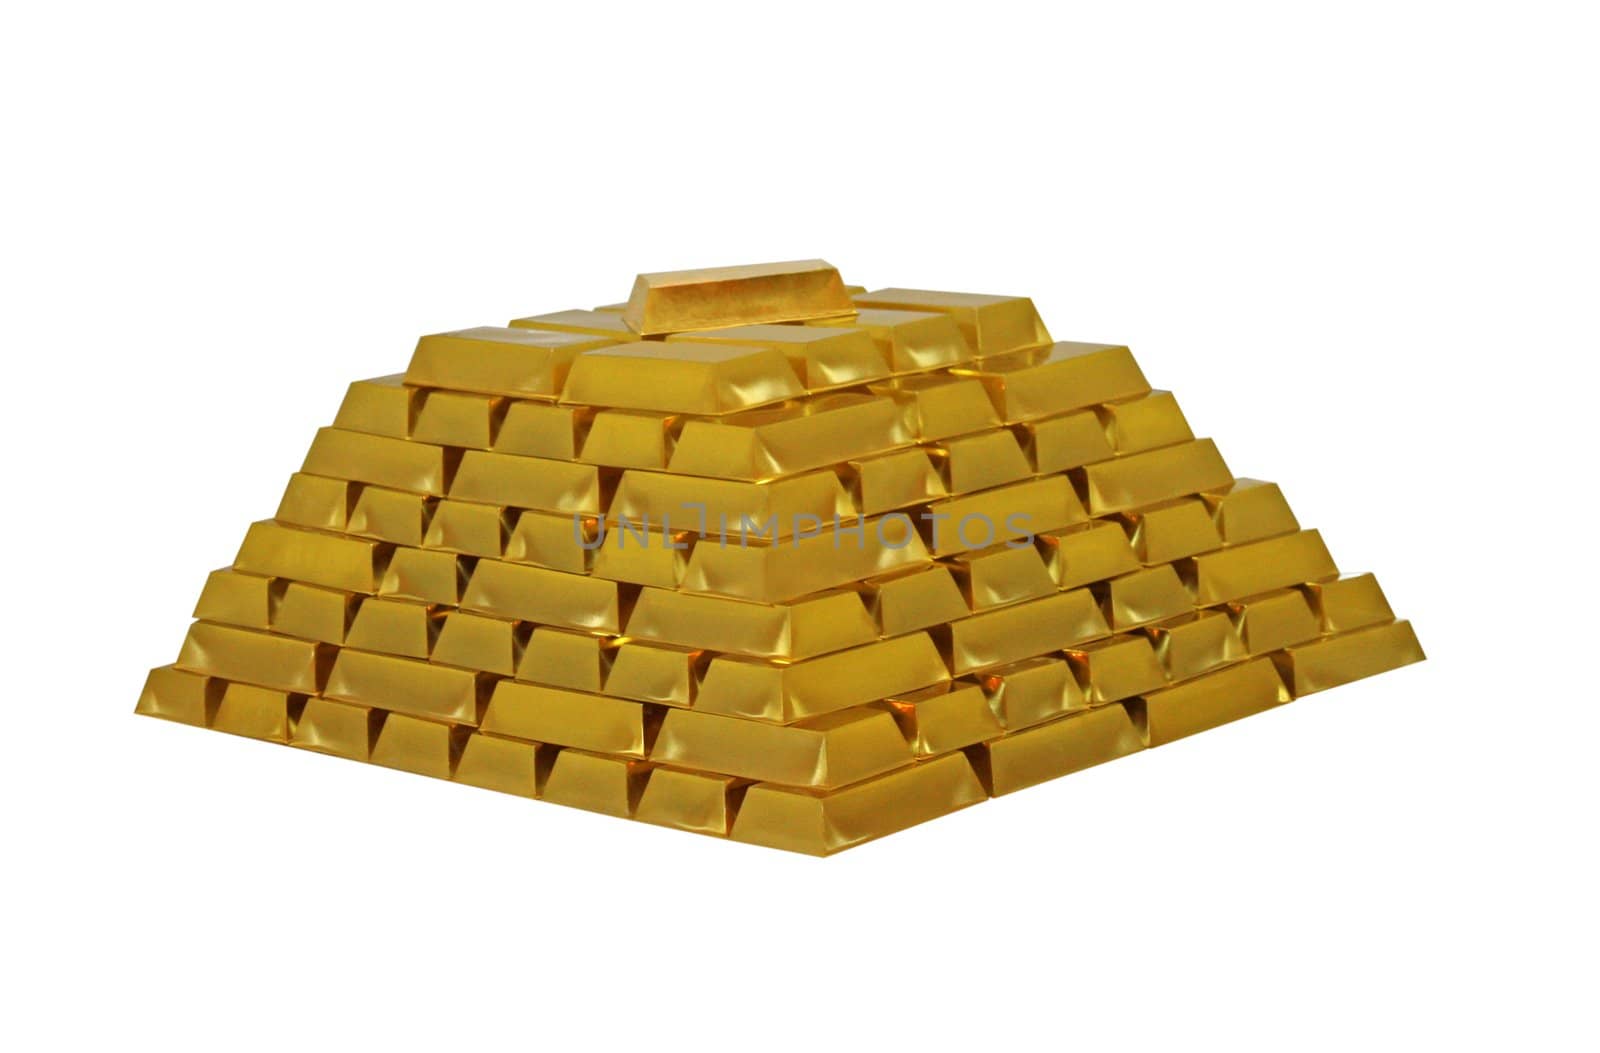 A Large Pile of Gold Bullion Bars.